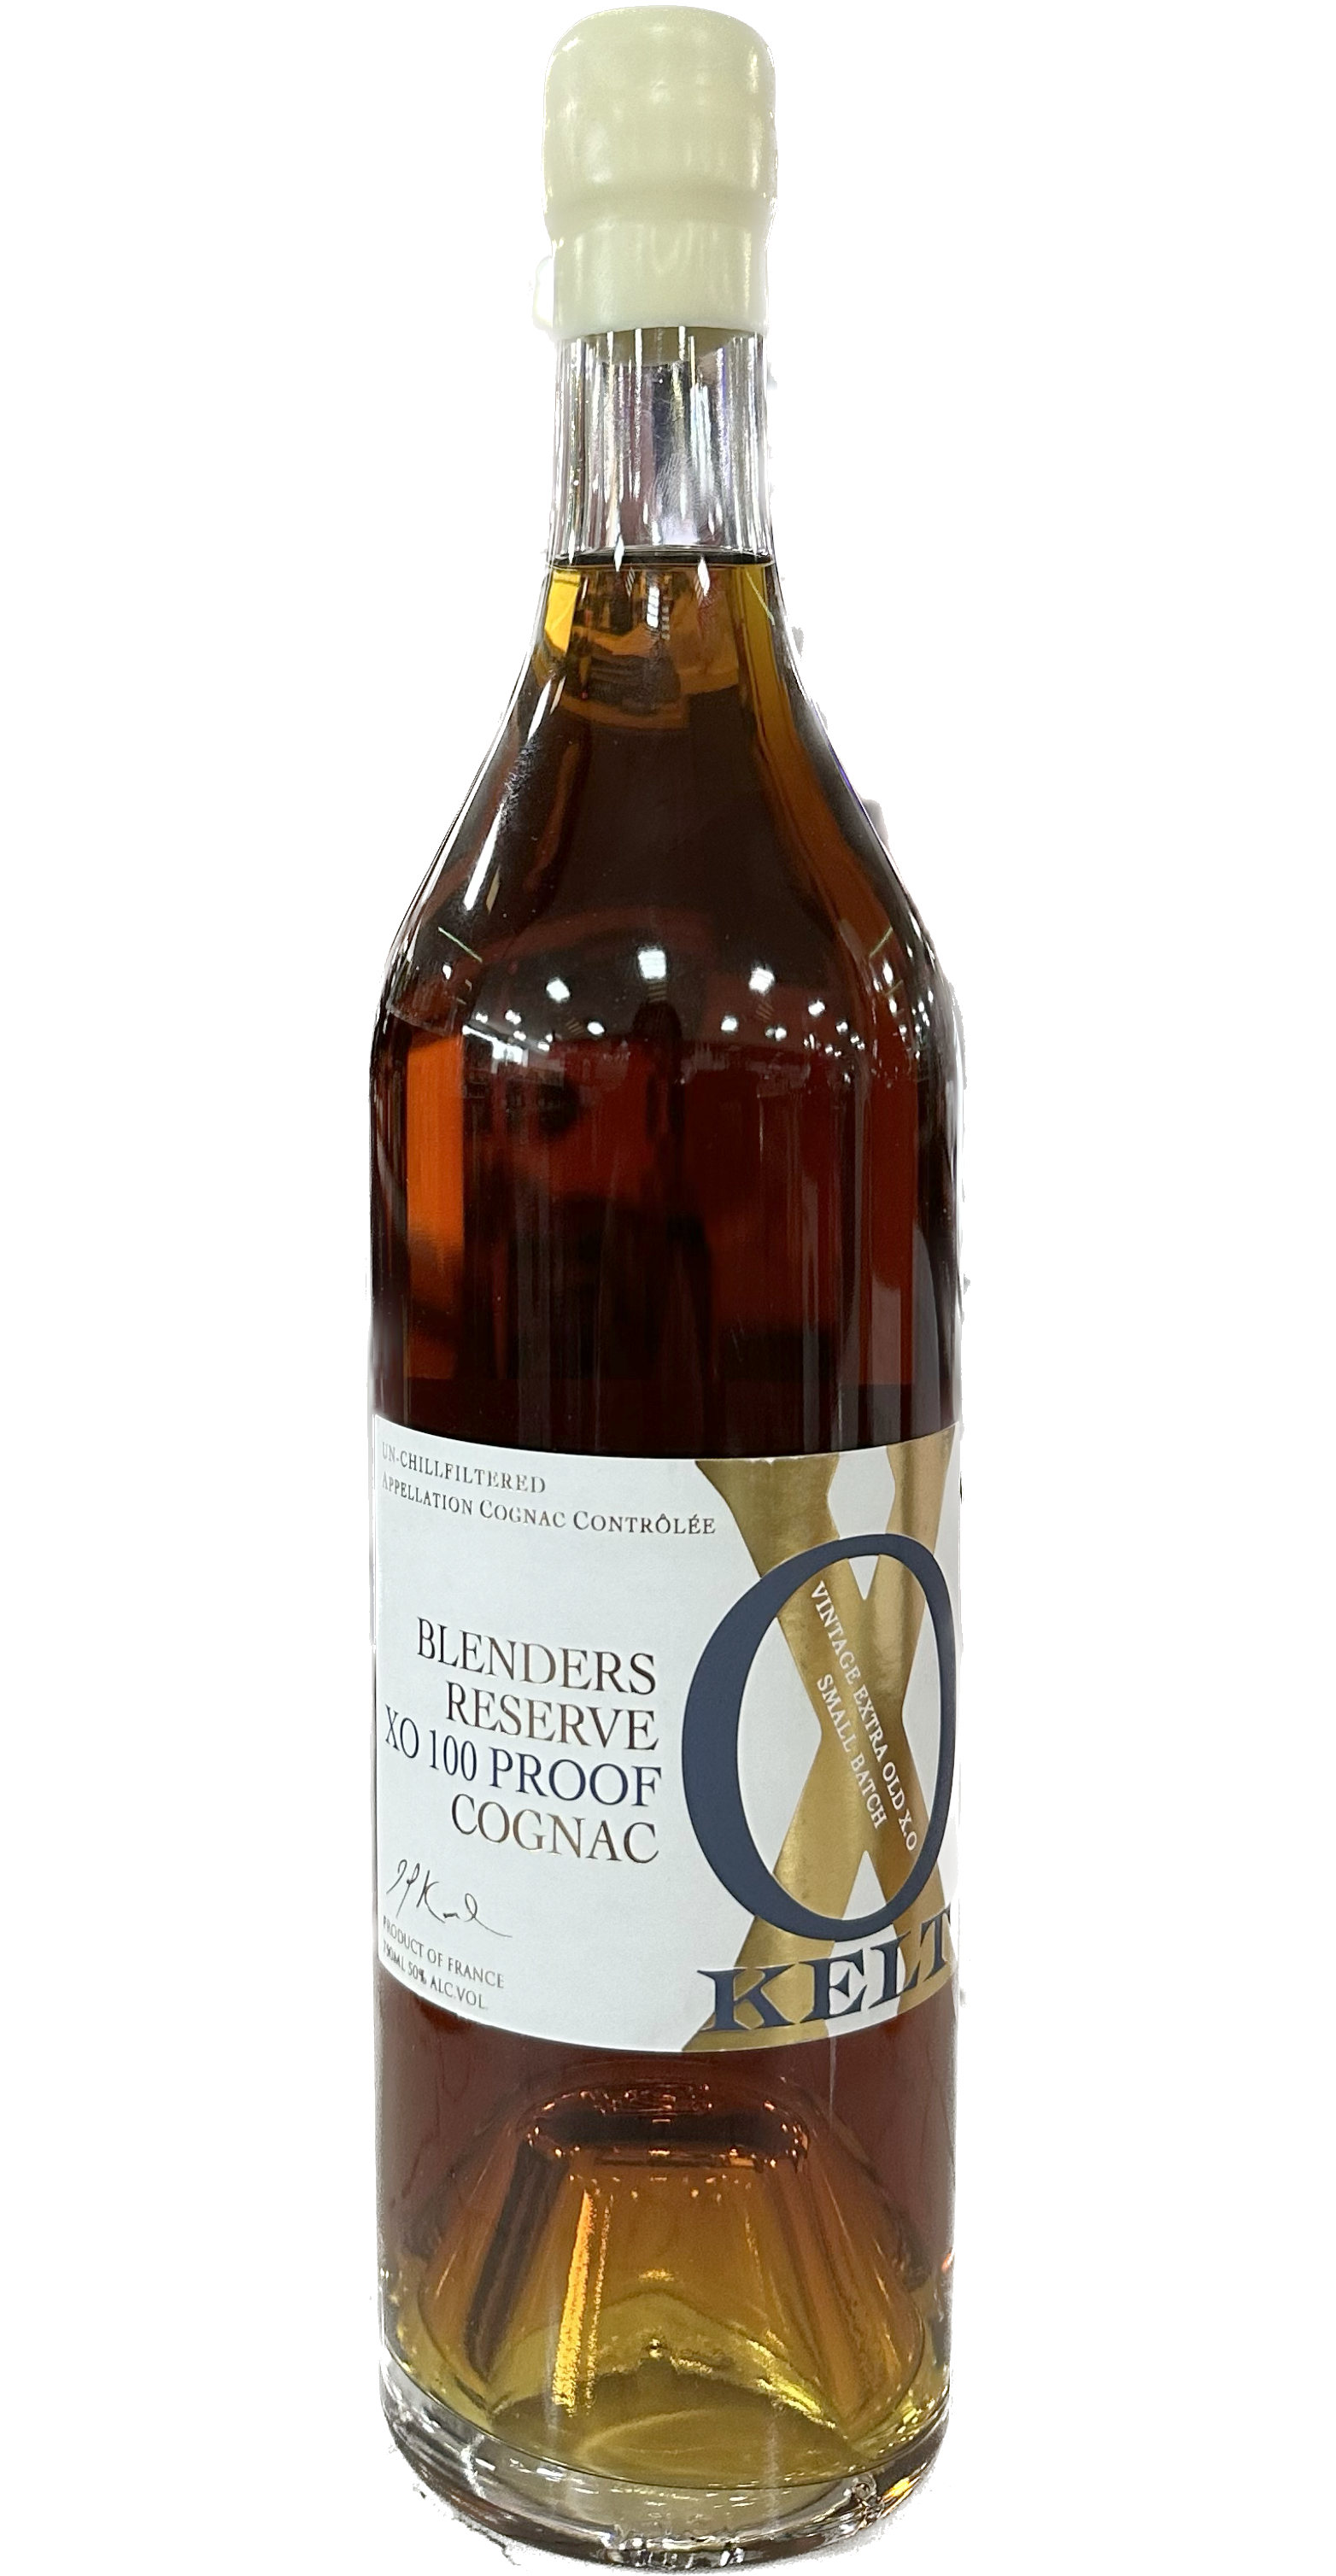 KELT COGNAC XO BLENDERS RESERVE SMALL BATCH 100PF 750ML - Remedy Liquor